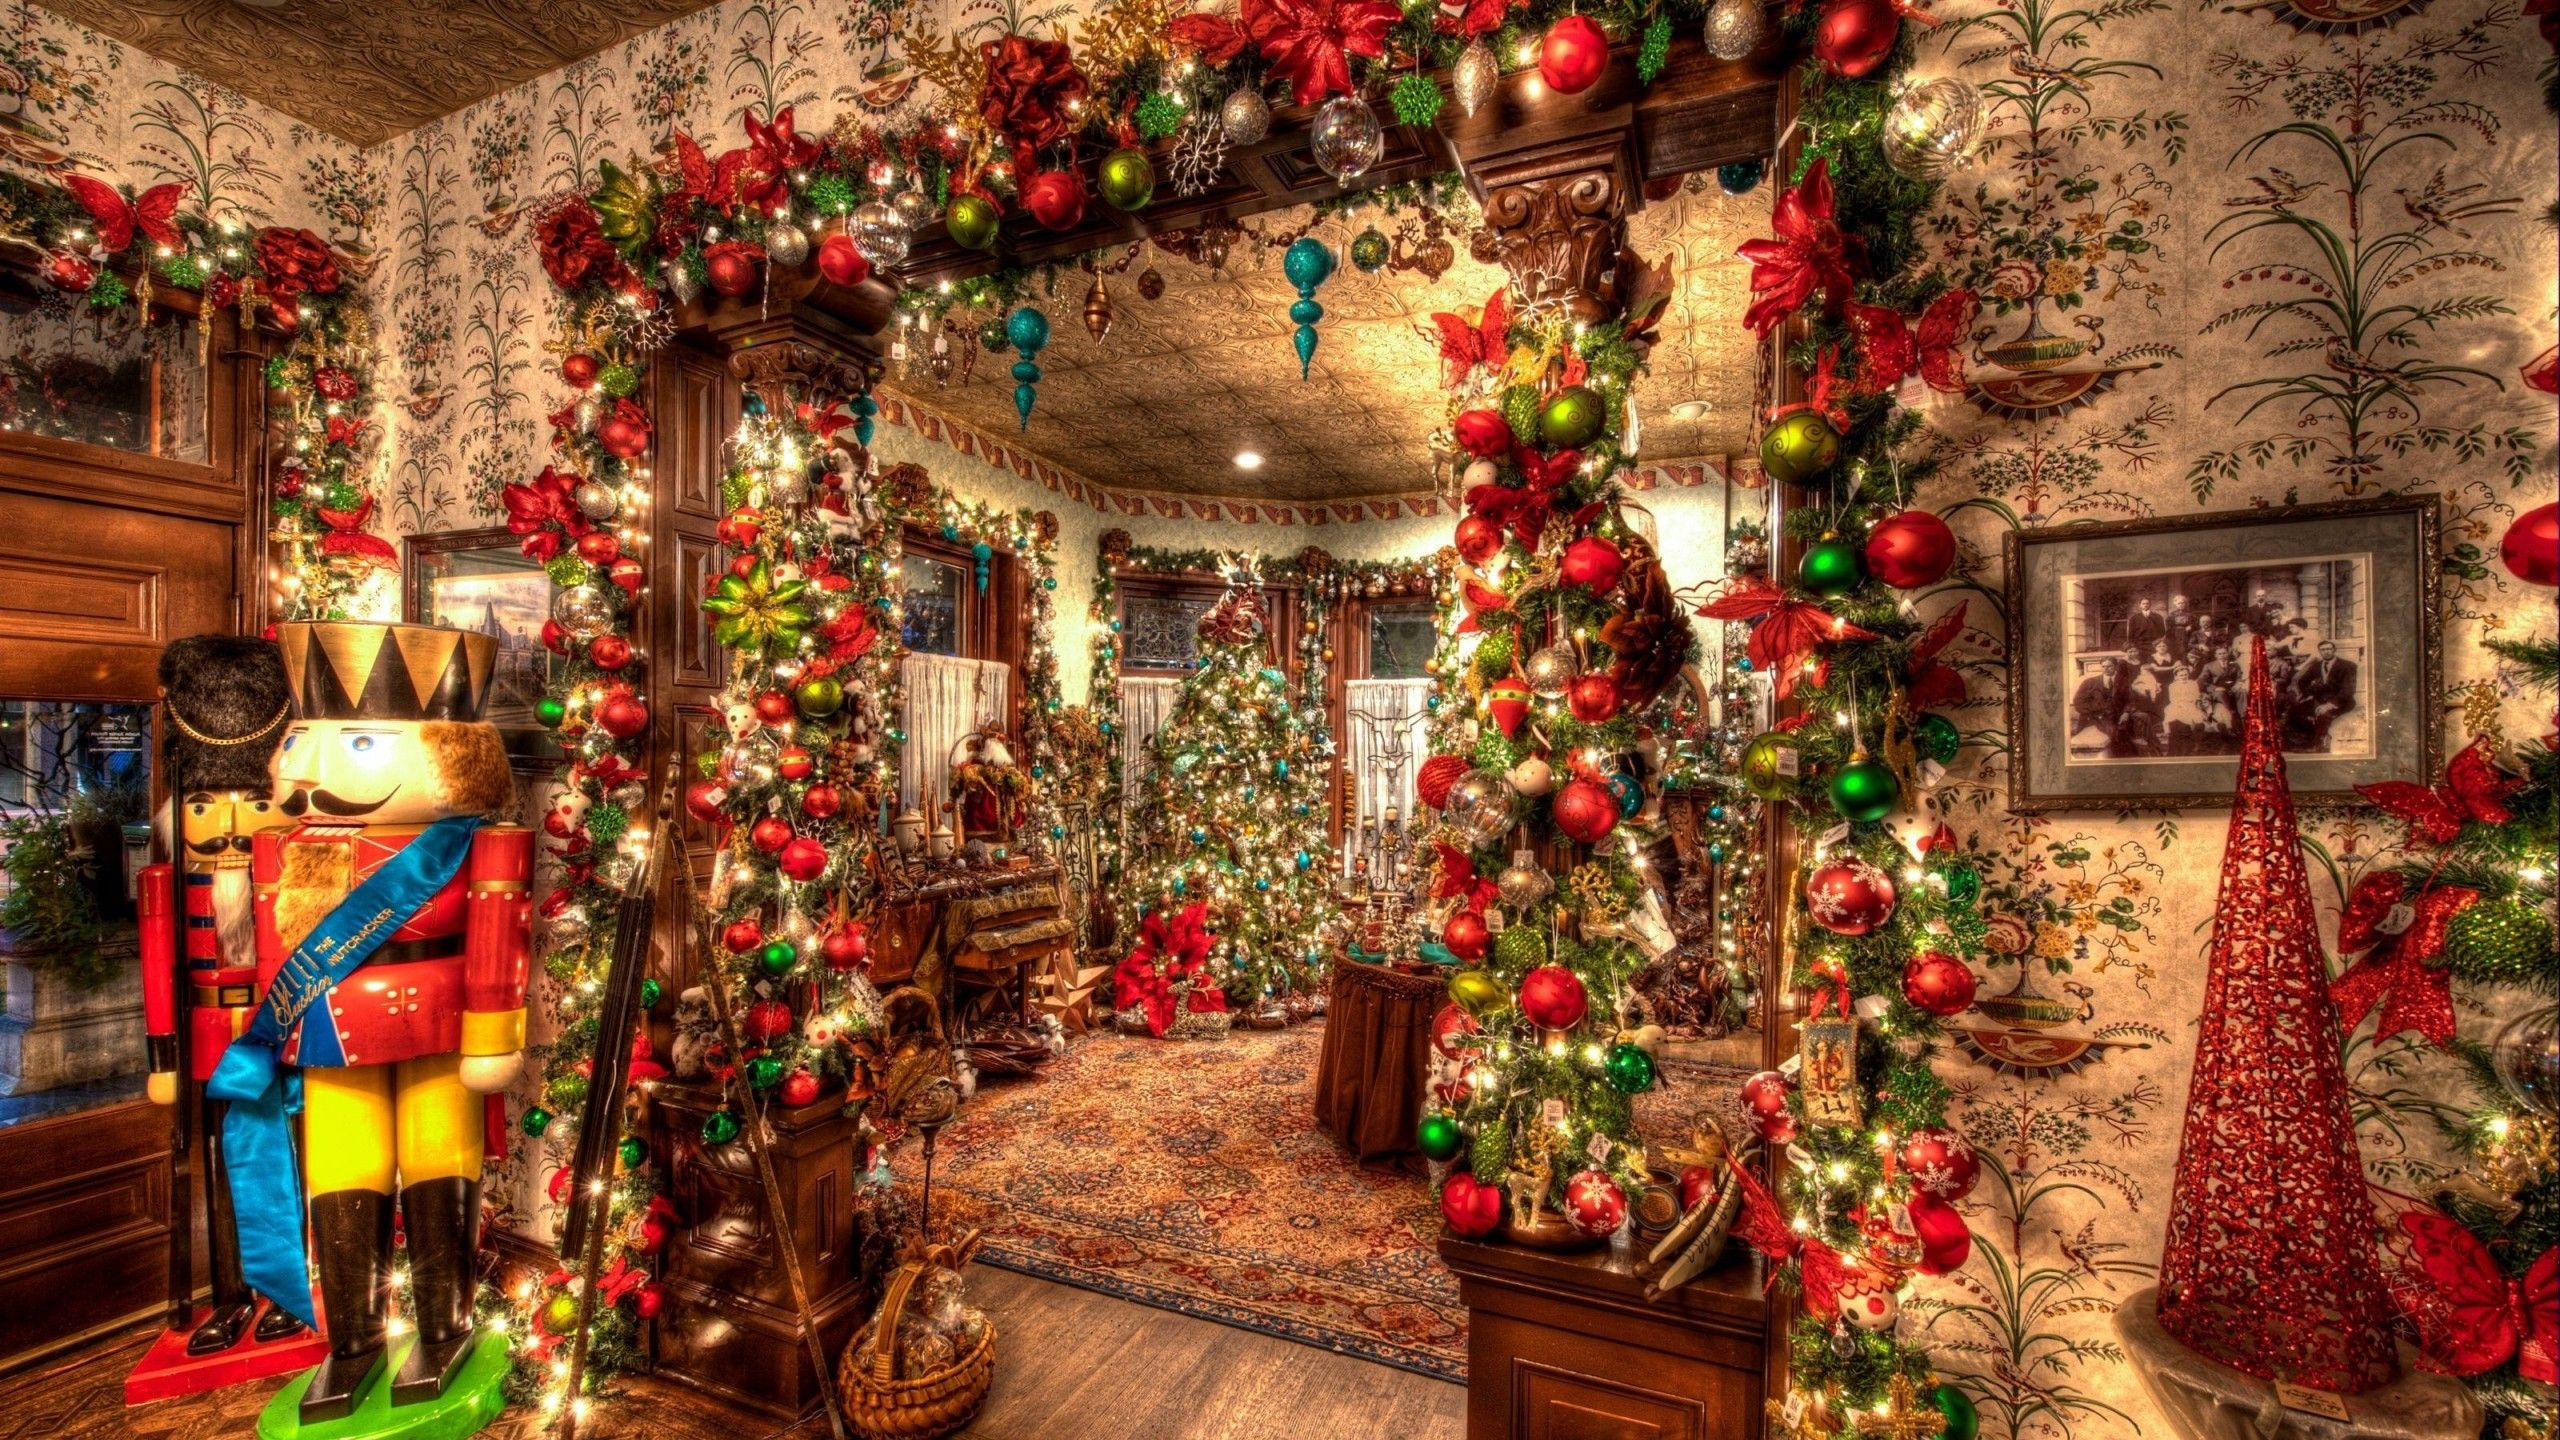 Christmas Tree Toys wallpaper. Christmas wallpaper, Christmas tree and santa, Christmas decorations for the home